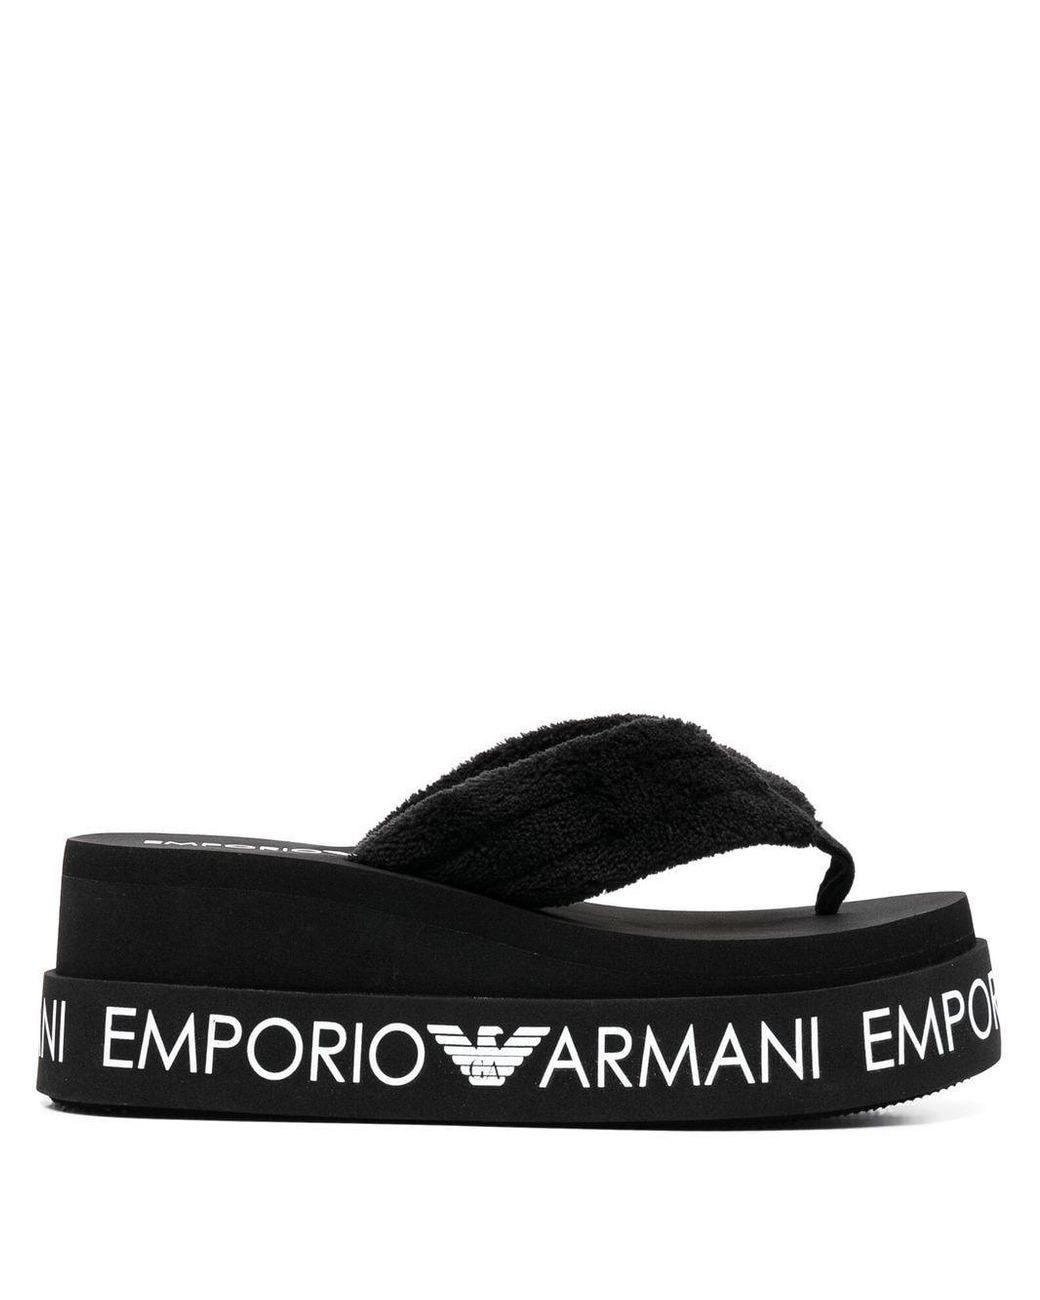 Emporio Armani Sandals Black | Lyst